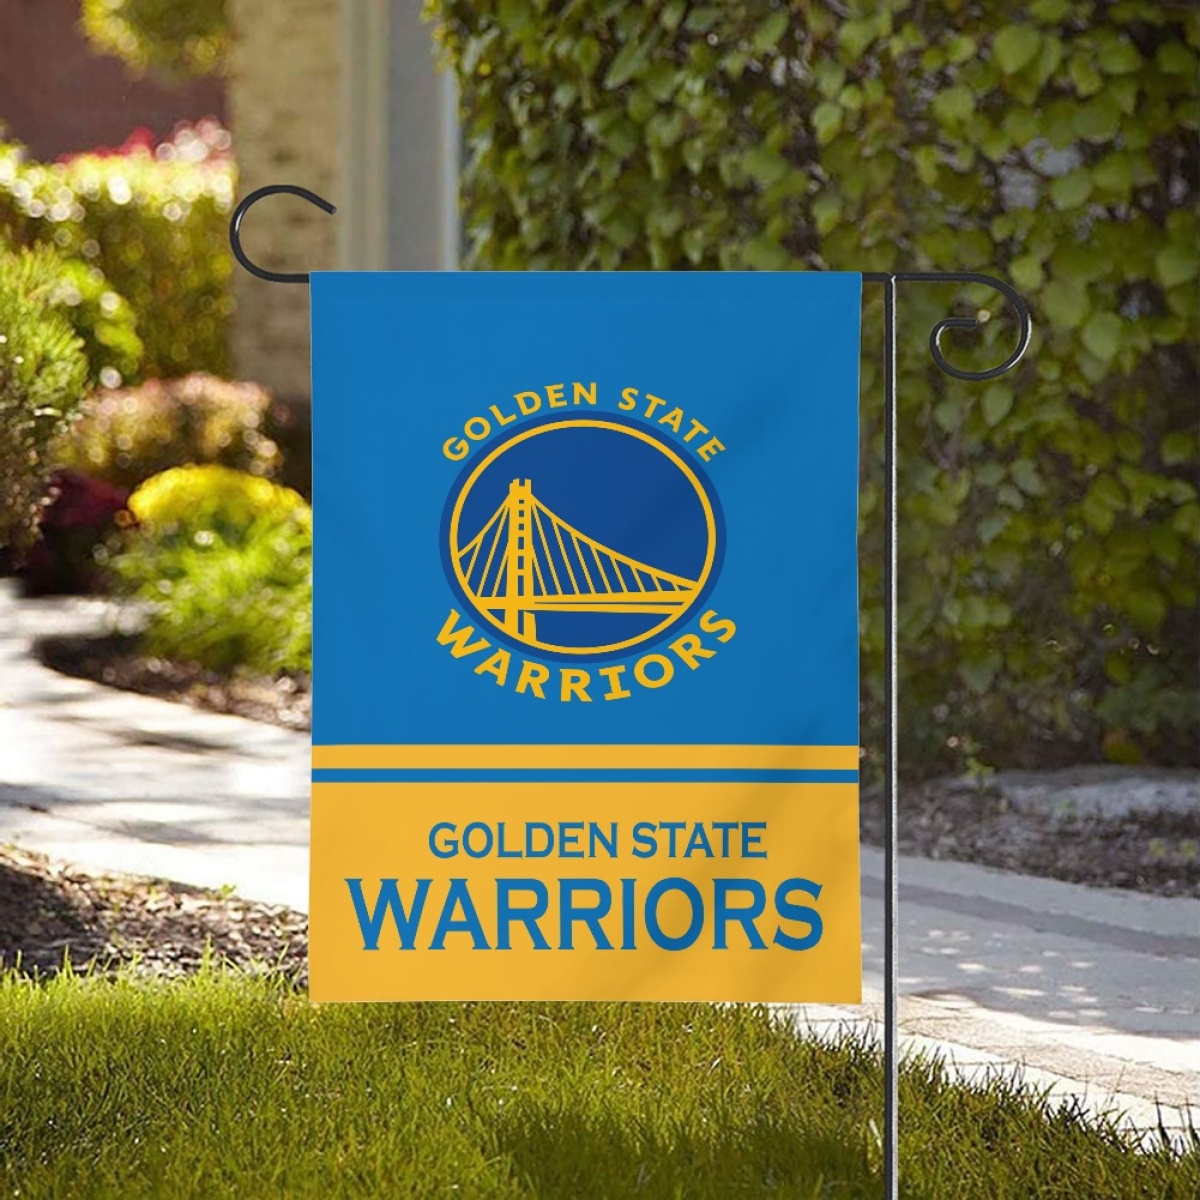 Golden State Warriors Double-Sided Garden Flag 001 (Pls check description for details)